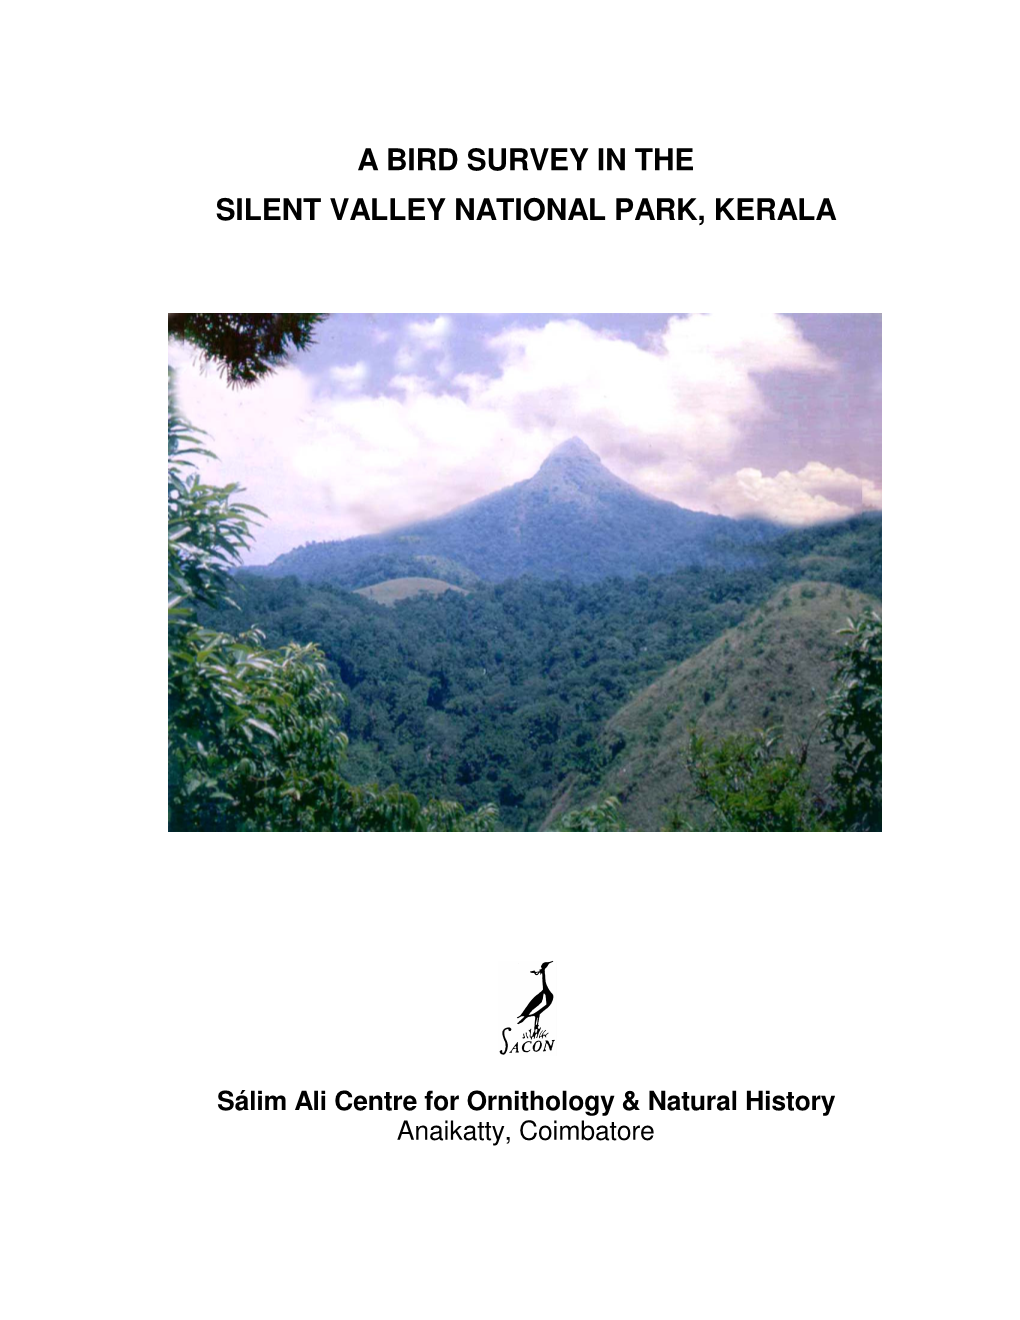 A Bird Survey in the Silent Valley National Park, Kerala